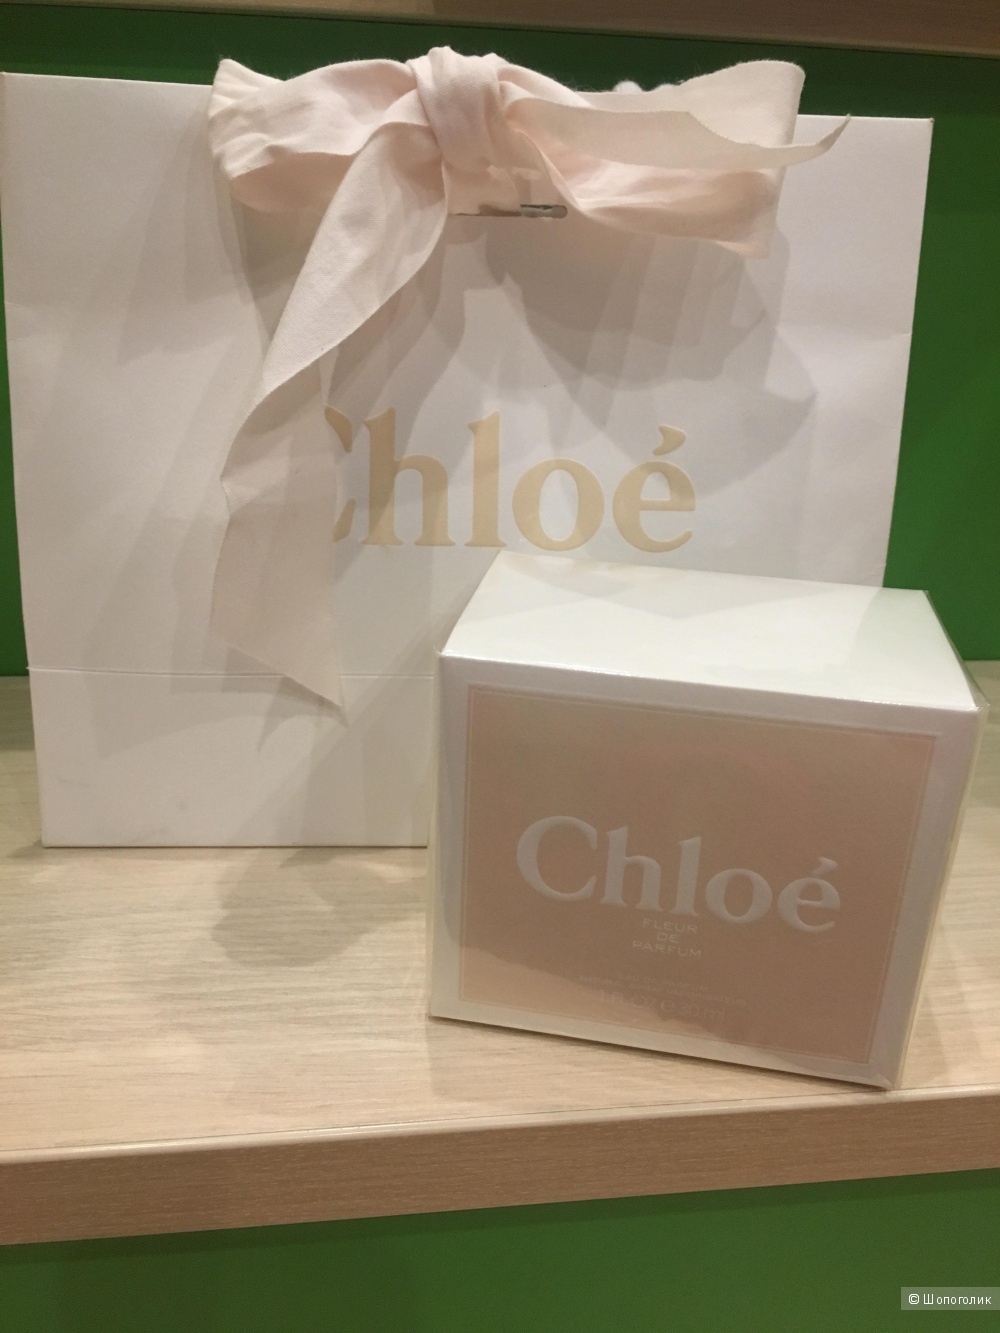 Chloe Fleur De Parfum 30ml